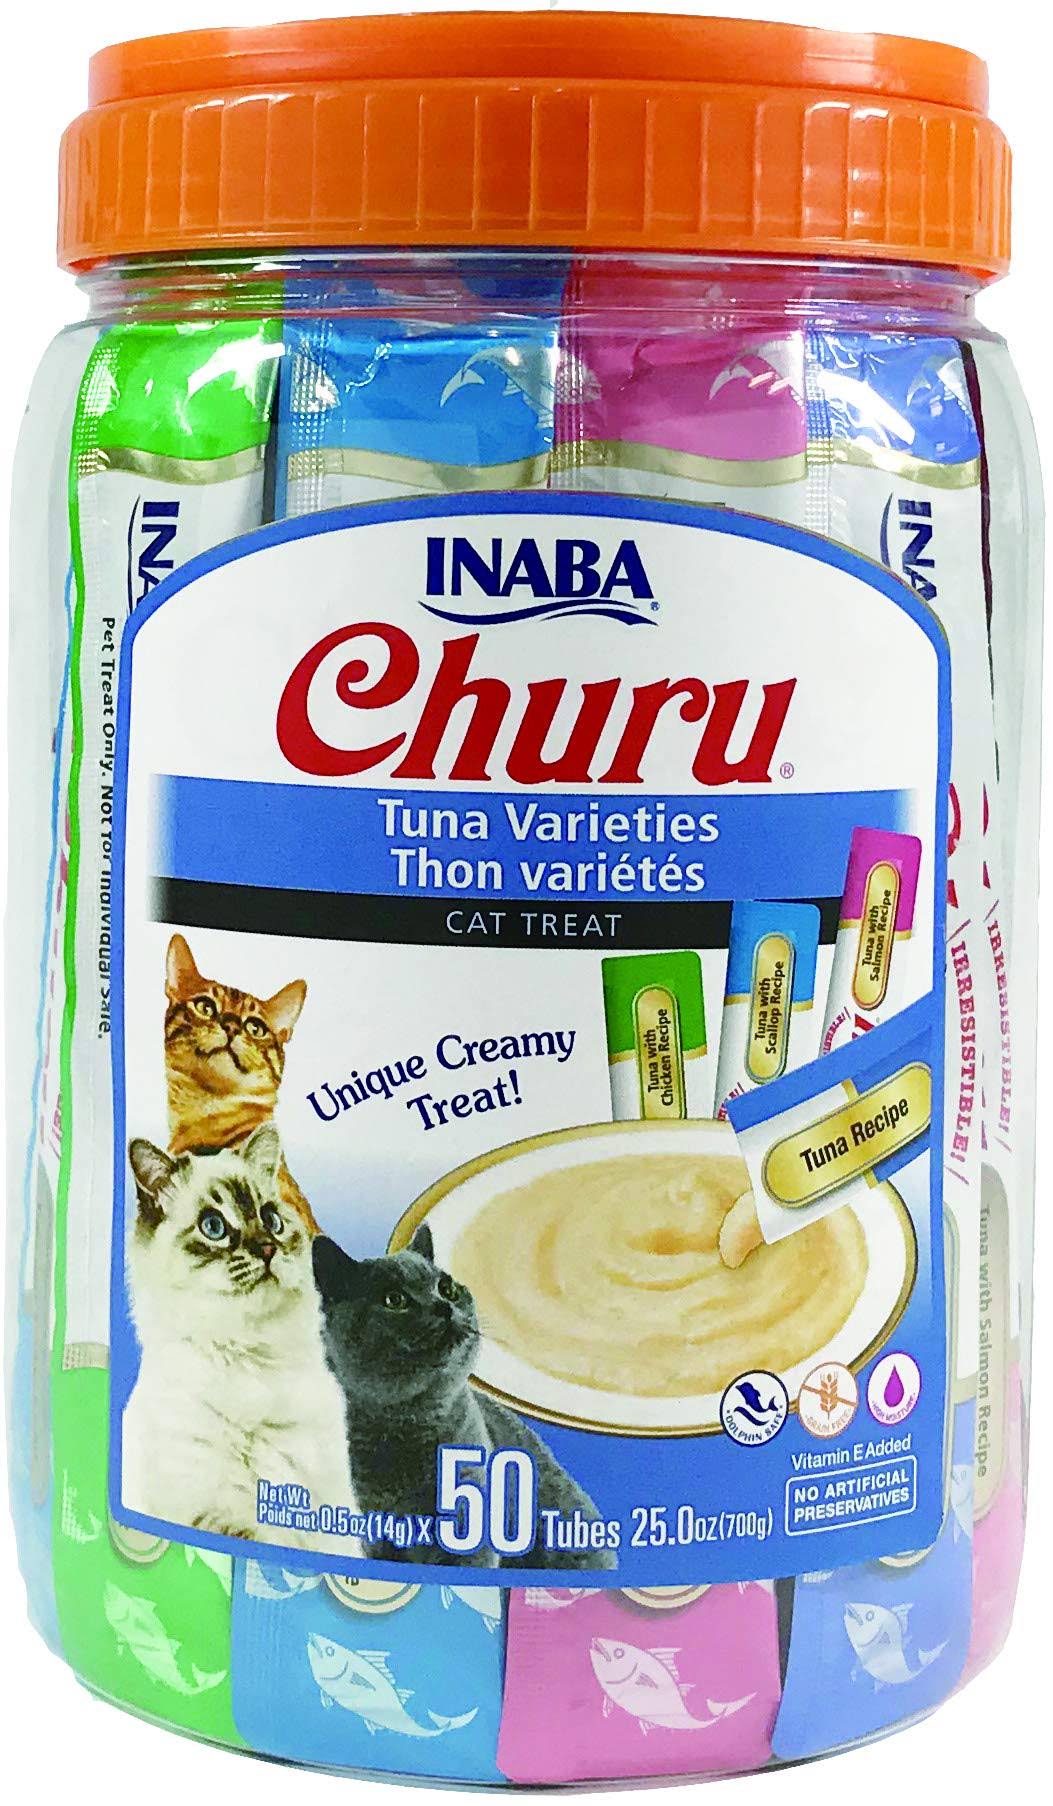 Churu Purée - Cat Treat - Tuna Varieties 50 Tubes